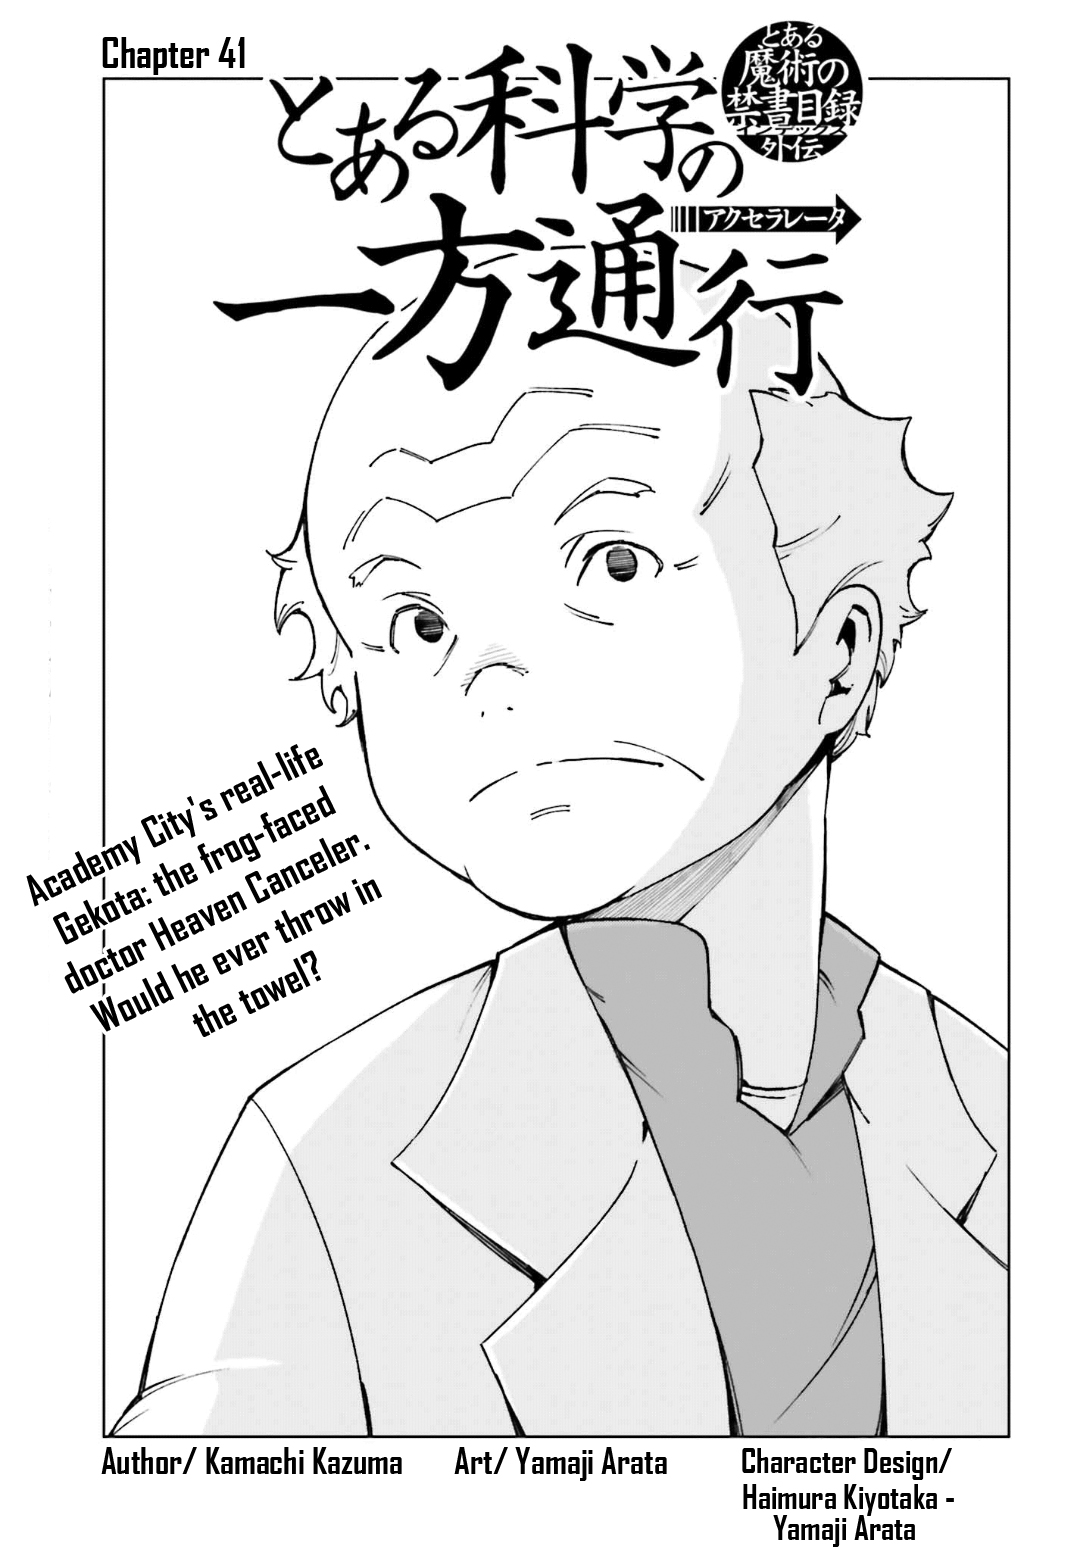 Toaru Kagaku no Accelerator Vol.7 Ch.41